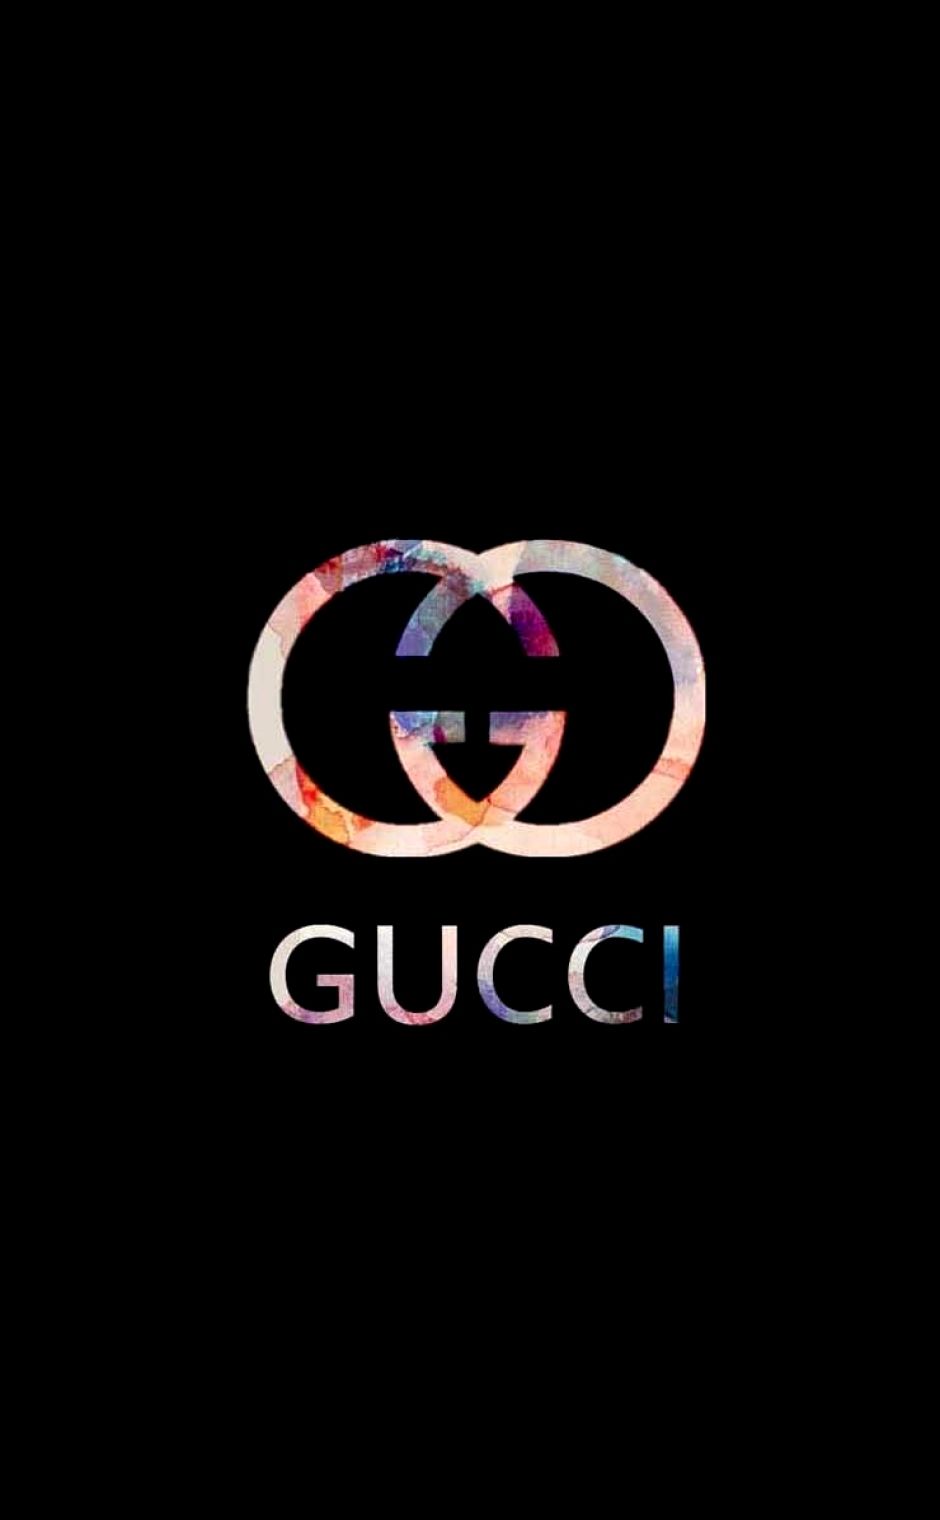 Gucci Apple Wallpaper Free Gucci Apple Background